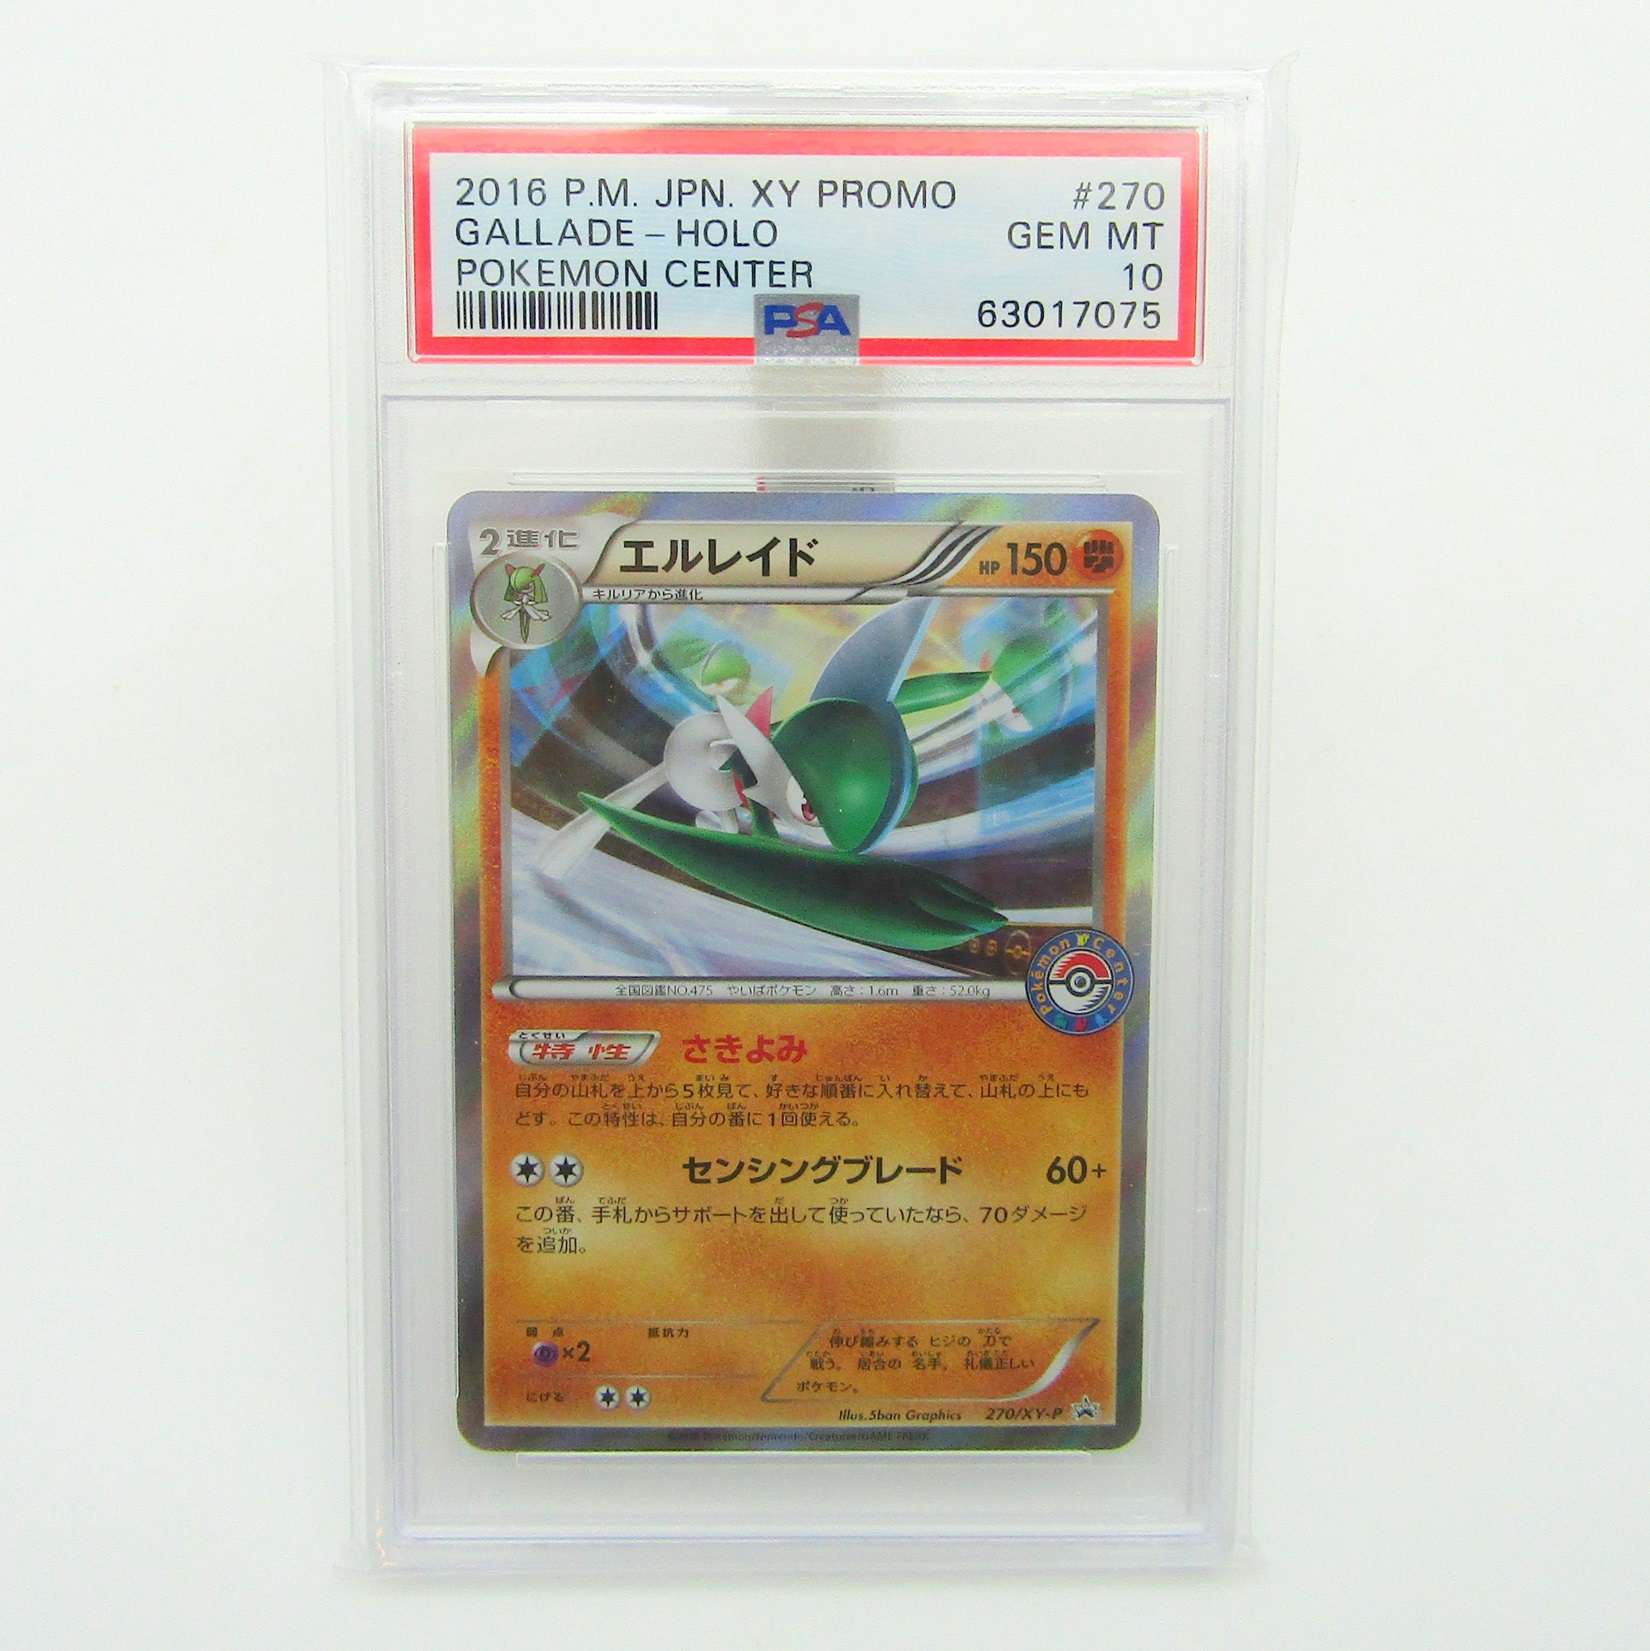 Pokémon Card. 2016. JPN. Promo Pokémon Center. Gallade Holo. 270/XY-P. PSA 10